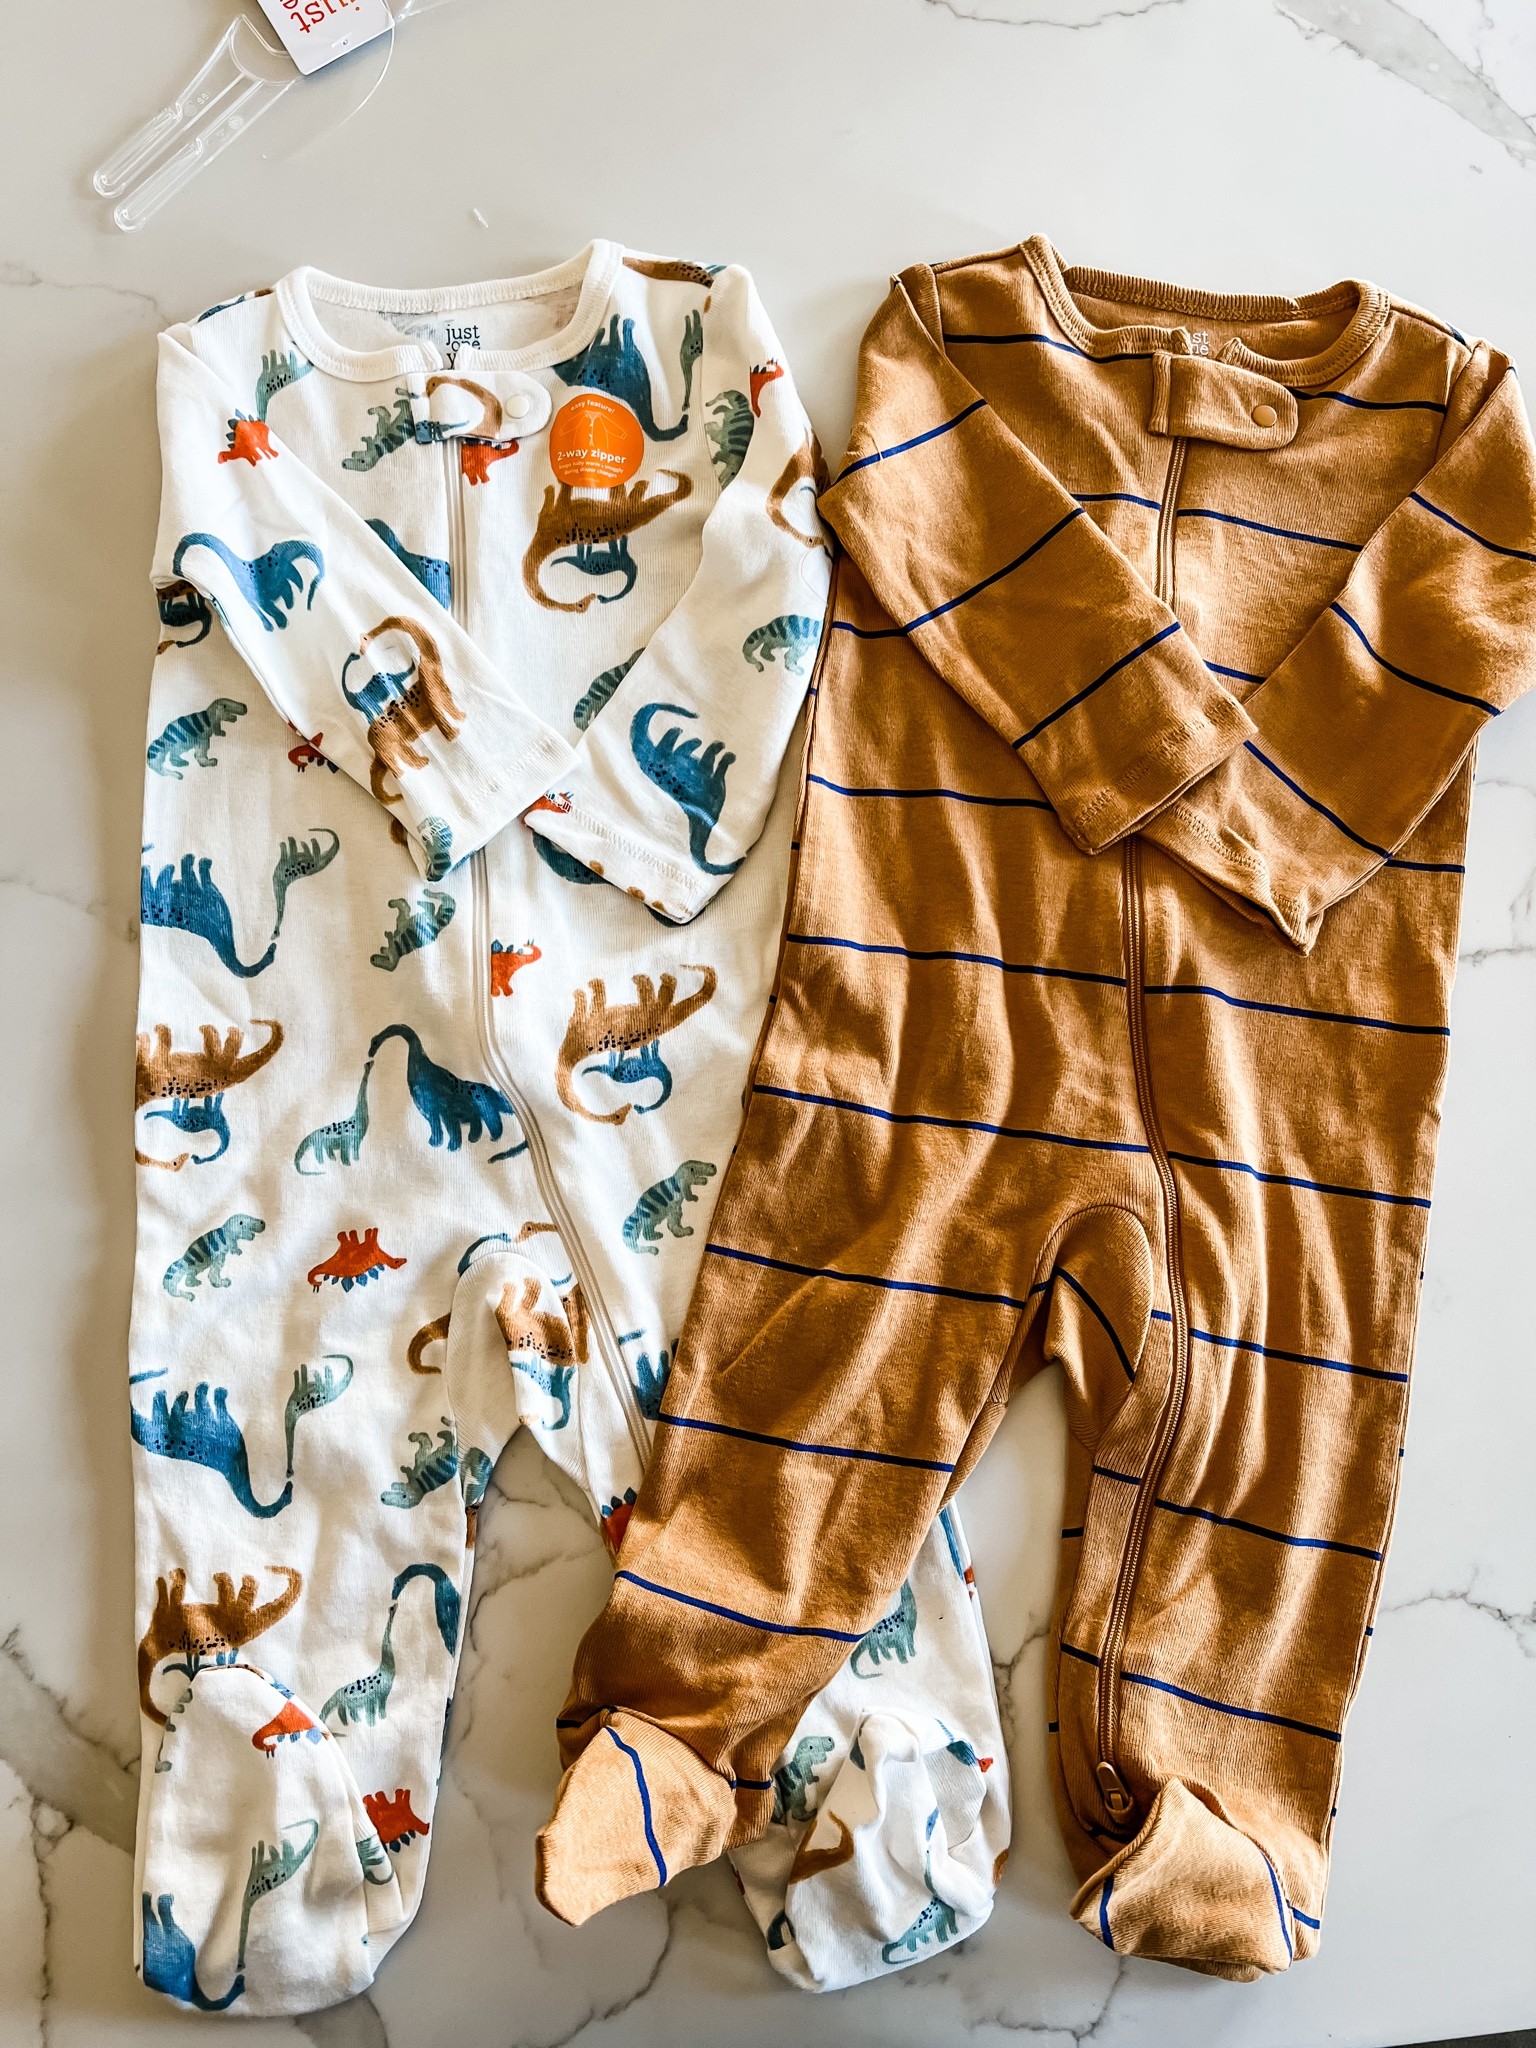 Hudson Baby Mens Unisex Holiday Pajamas, Moose Wonderful Time : Target